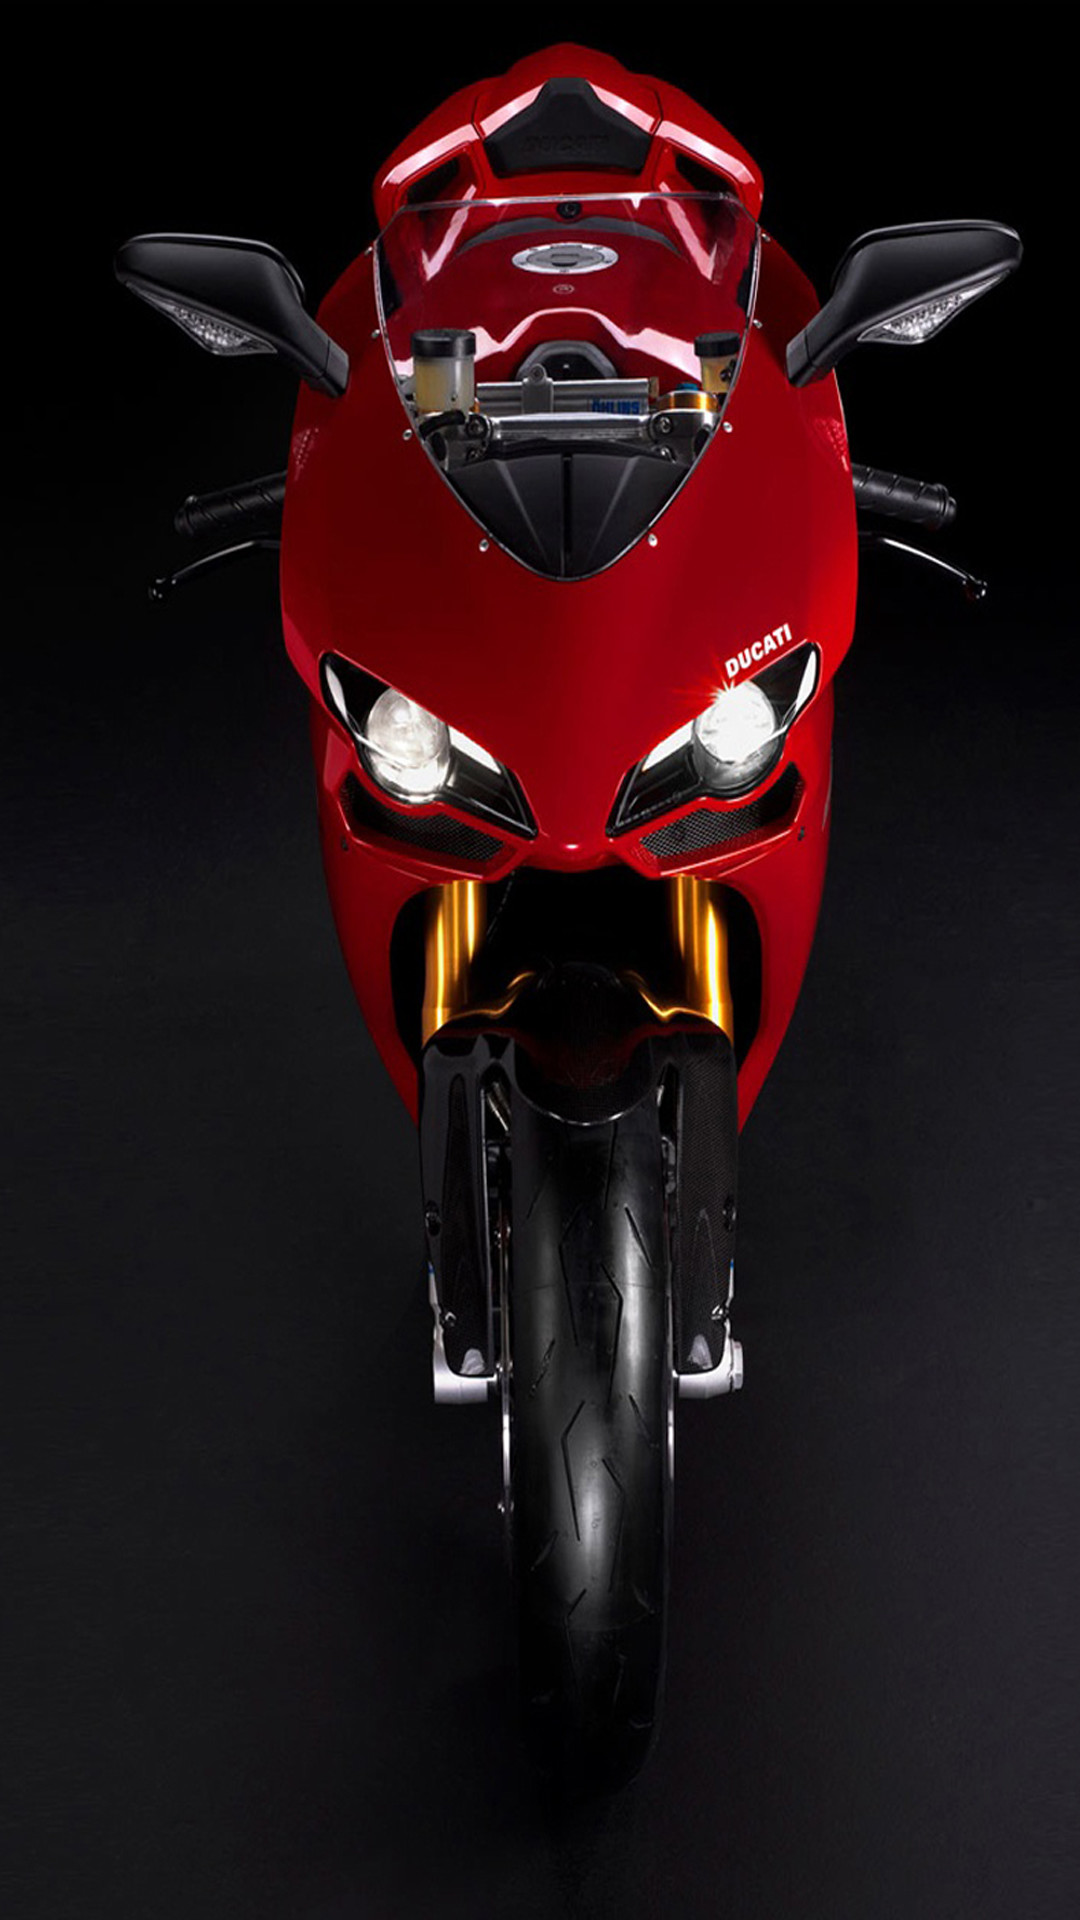 1080x1920 Ducati 1198 Superbike Red iPhone 6 Plus HD Wallpaper ...